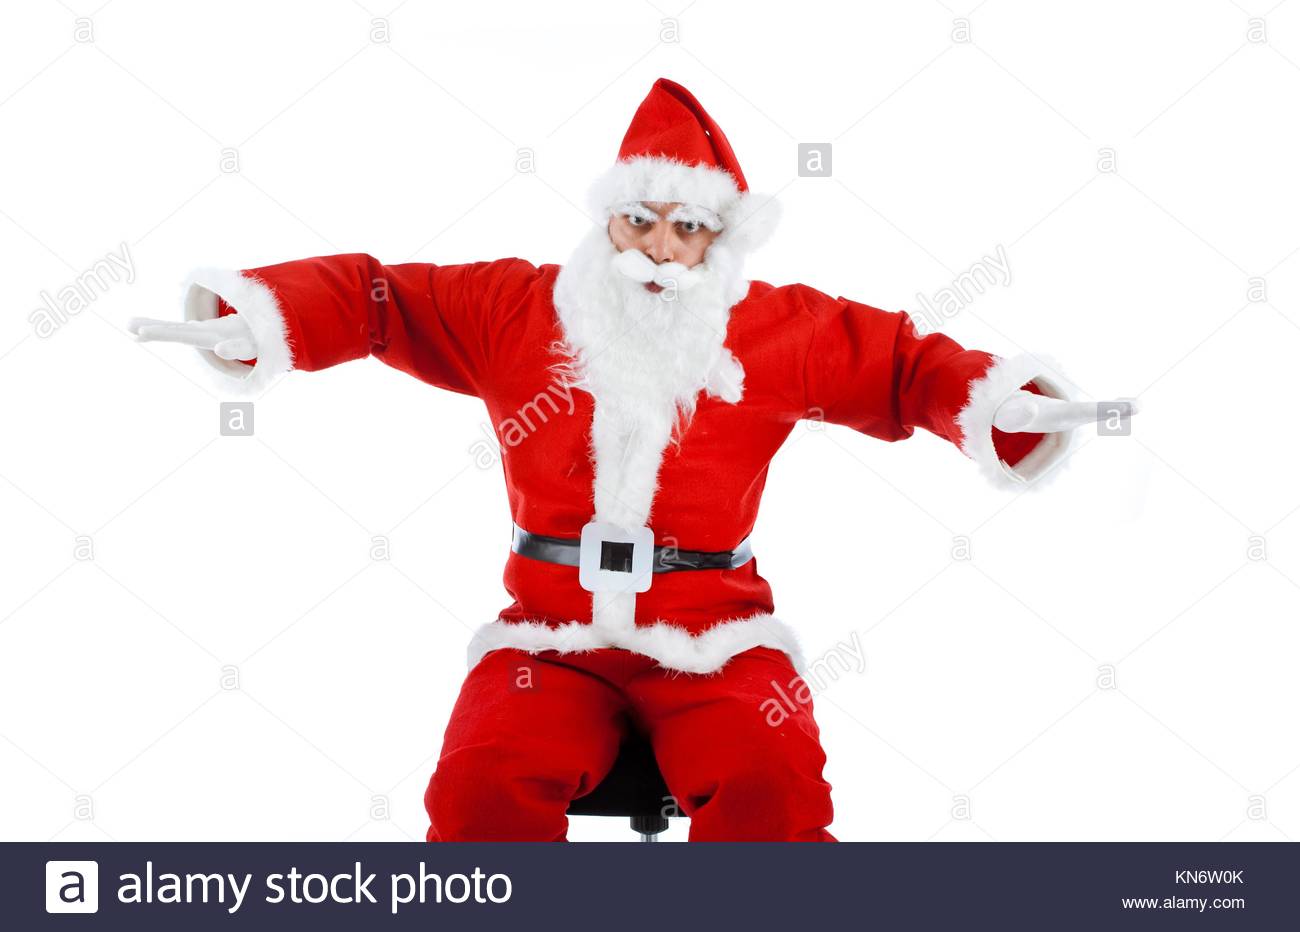 Santa Claus mimics a plane on white background Stock Image